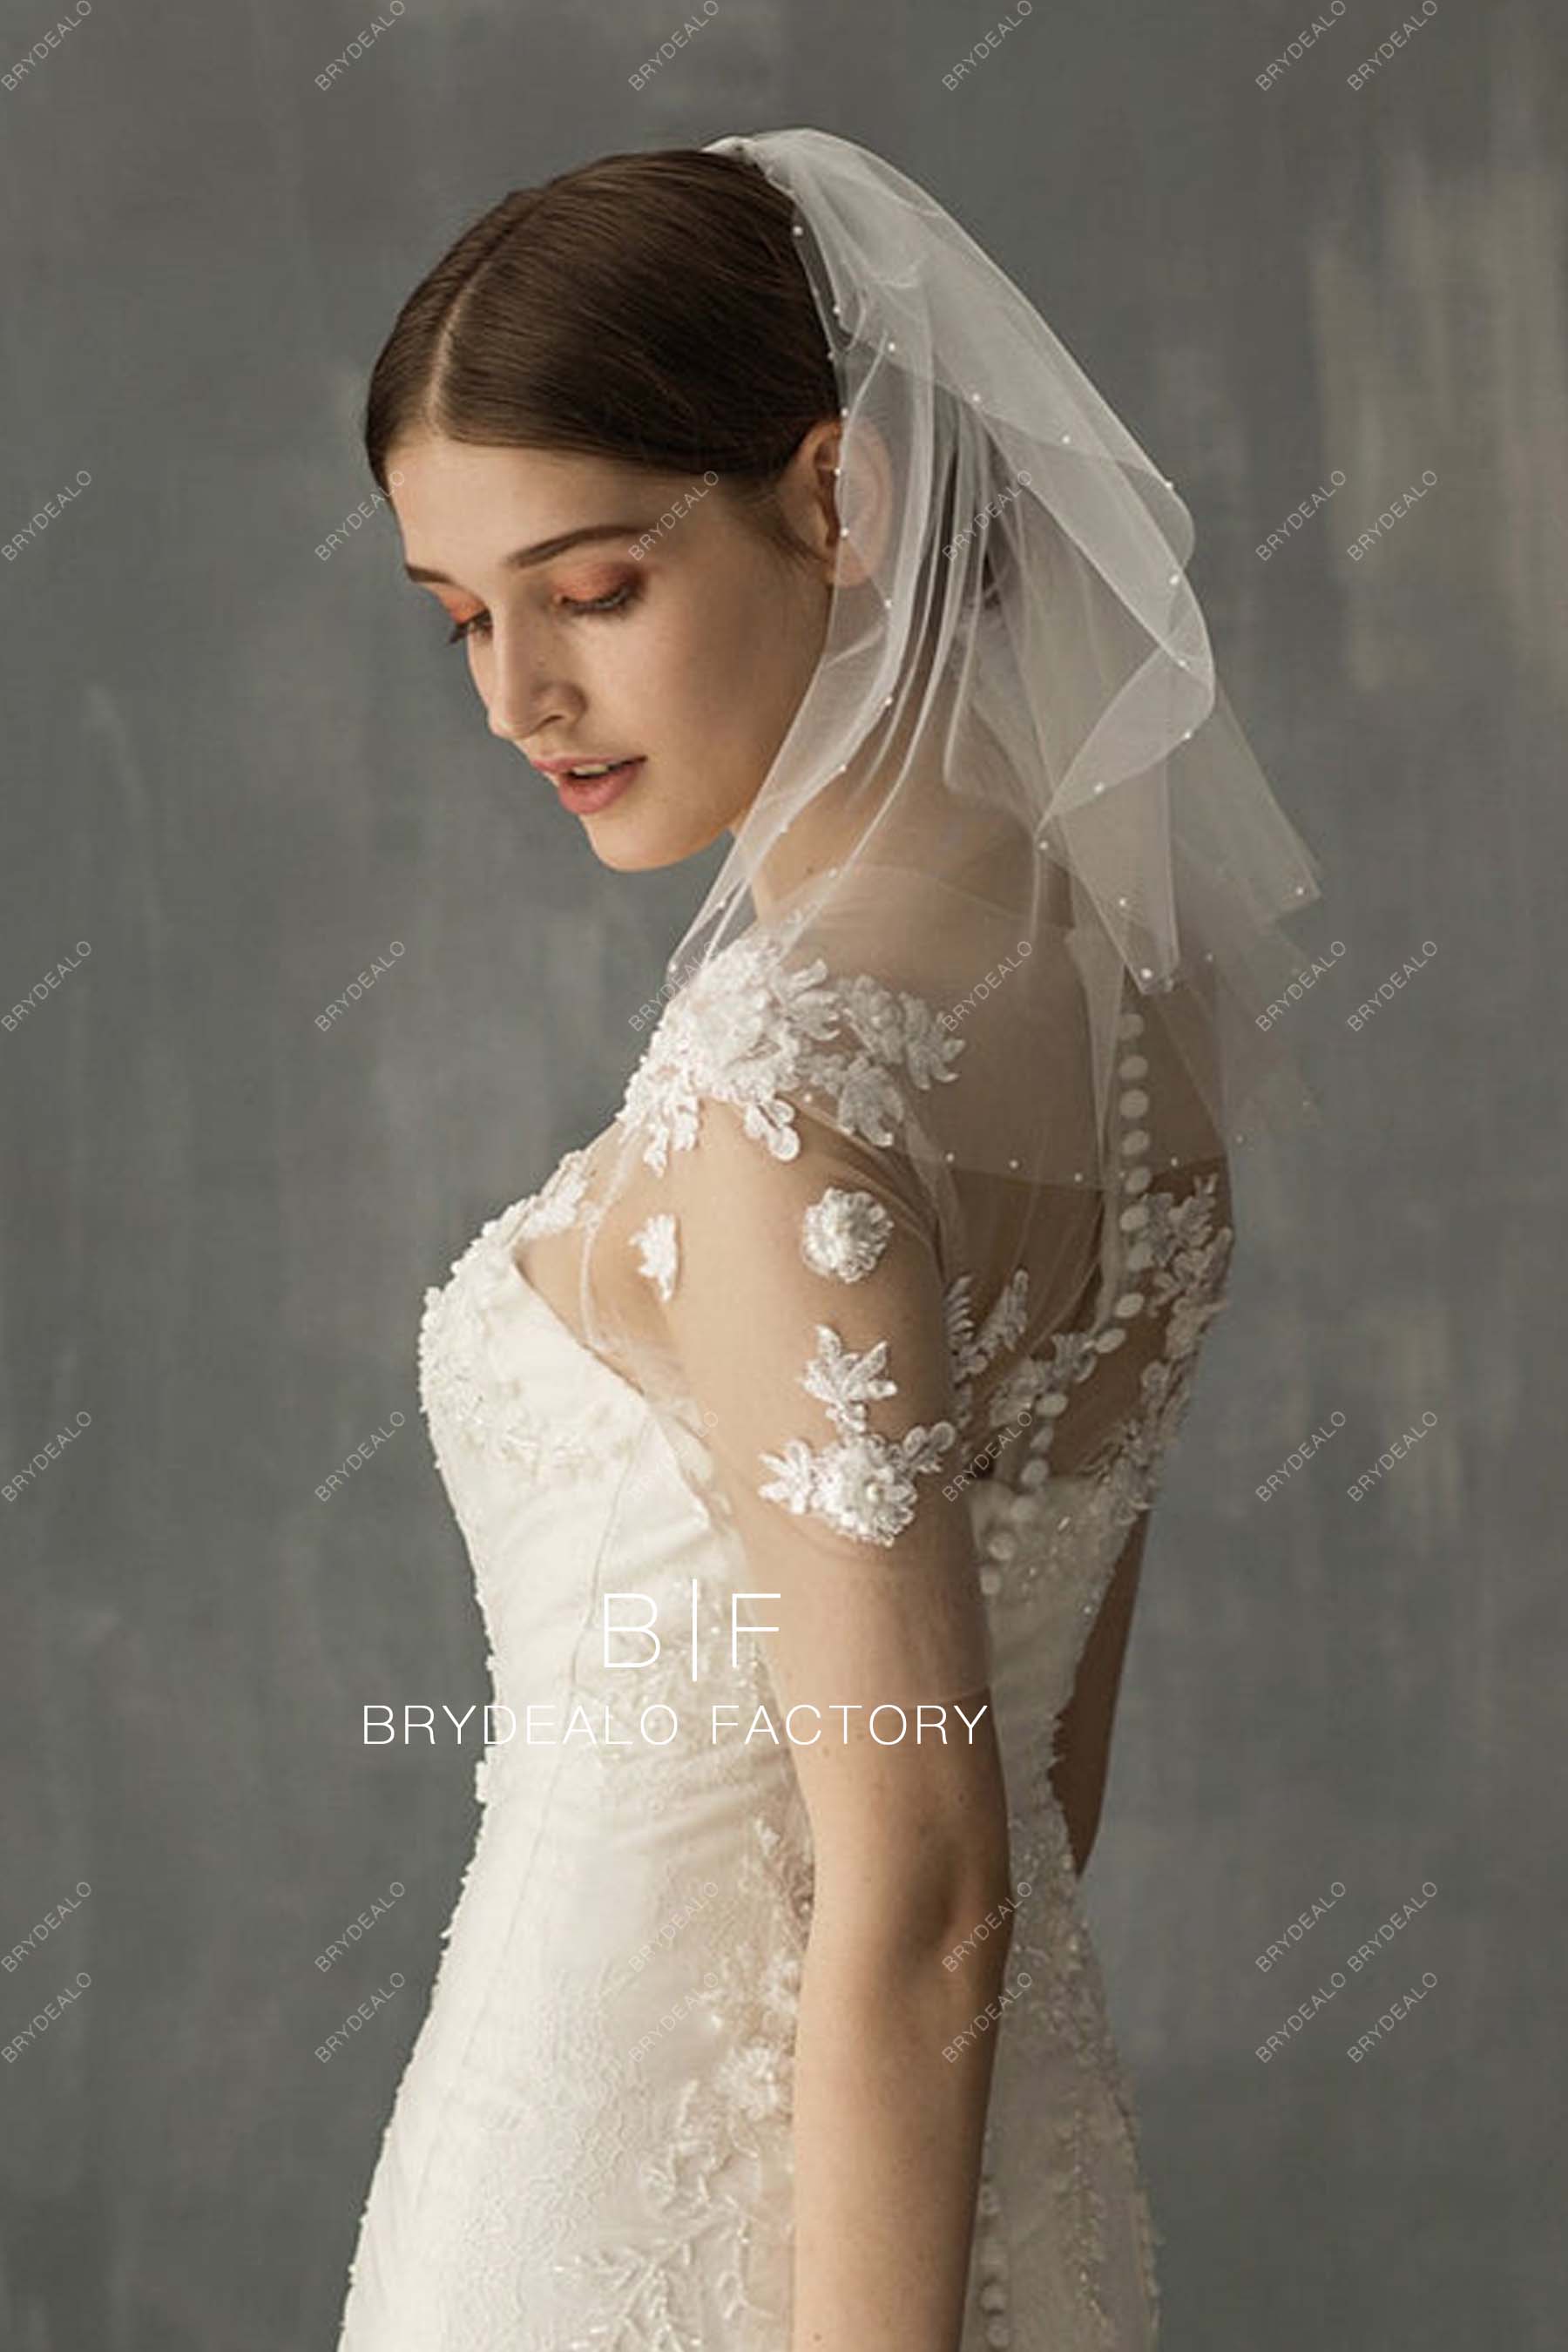 pearls shoulder length wedding veil short tulle bridal headpiece